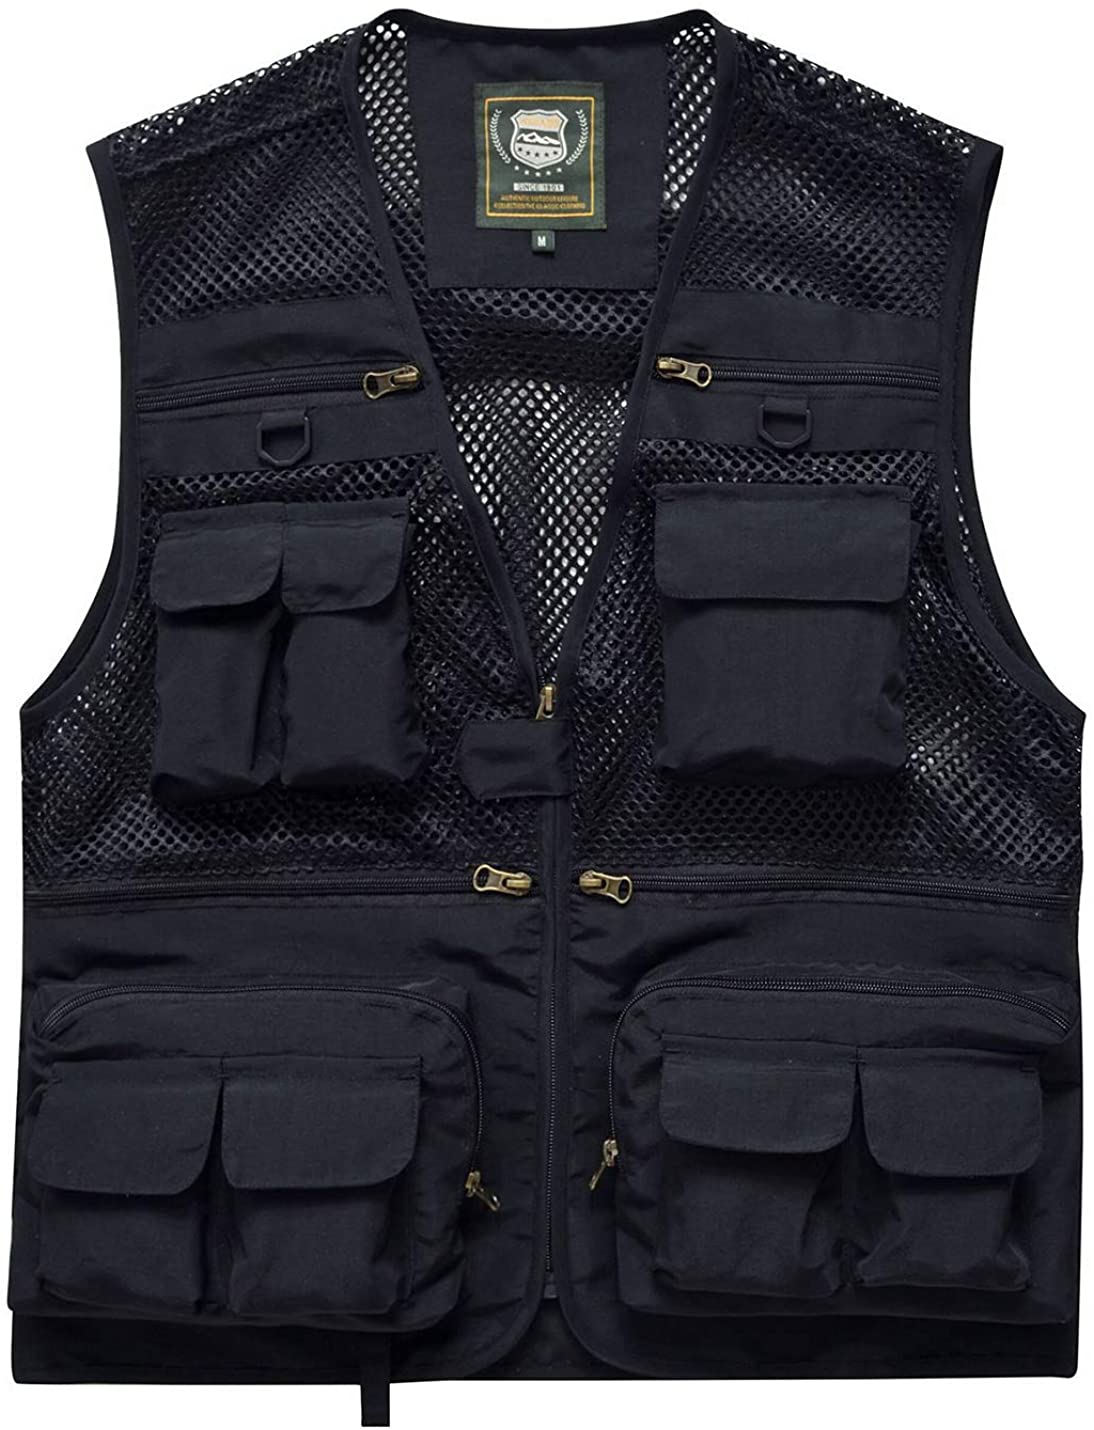 PEHMEA Mens Mesh Outdoor Work Safari Fishing Travel Photo Cargo Vest Multi Pockets Breathable Waistcoat Jacket 